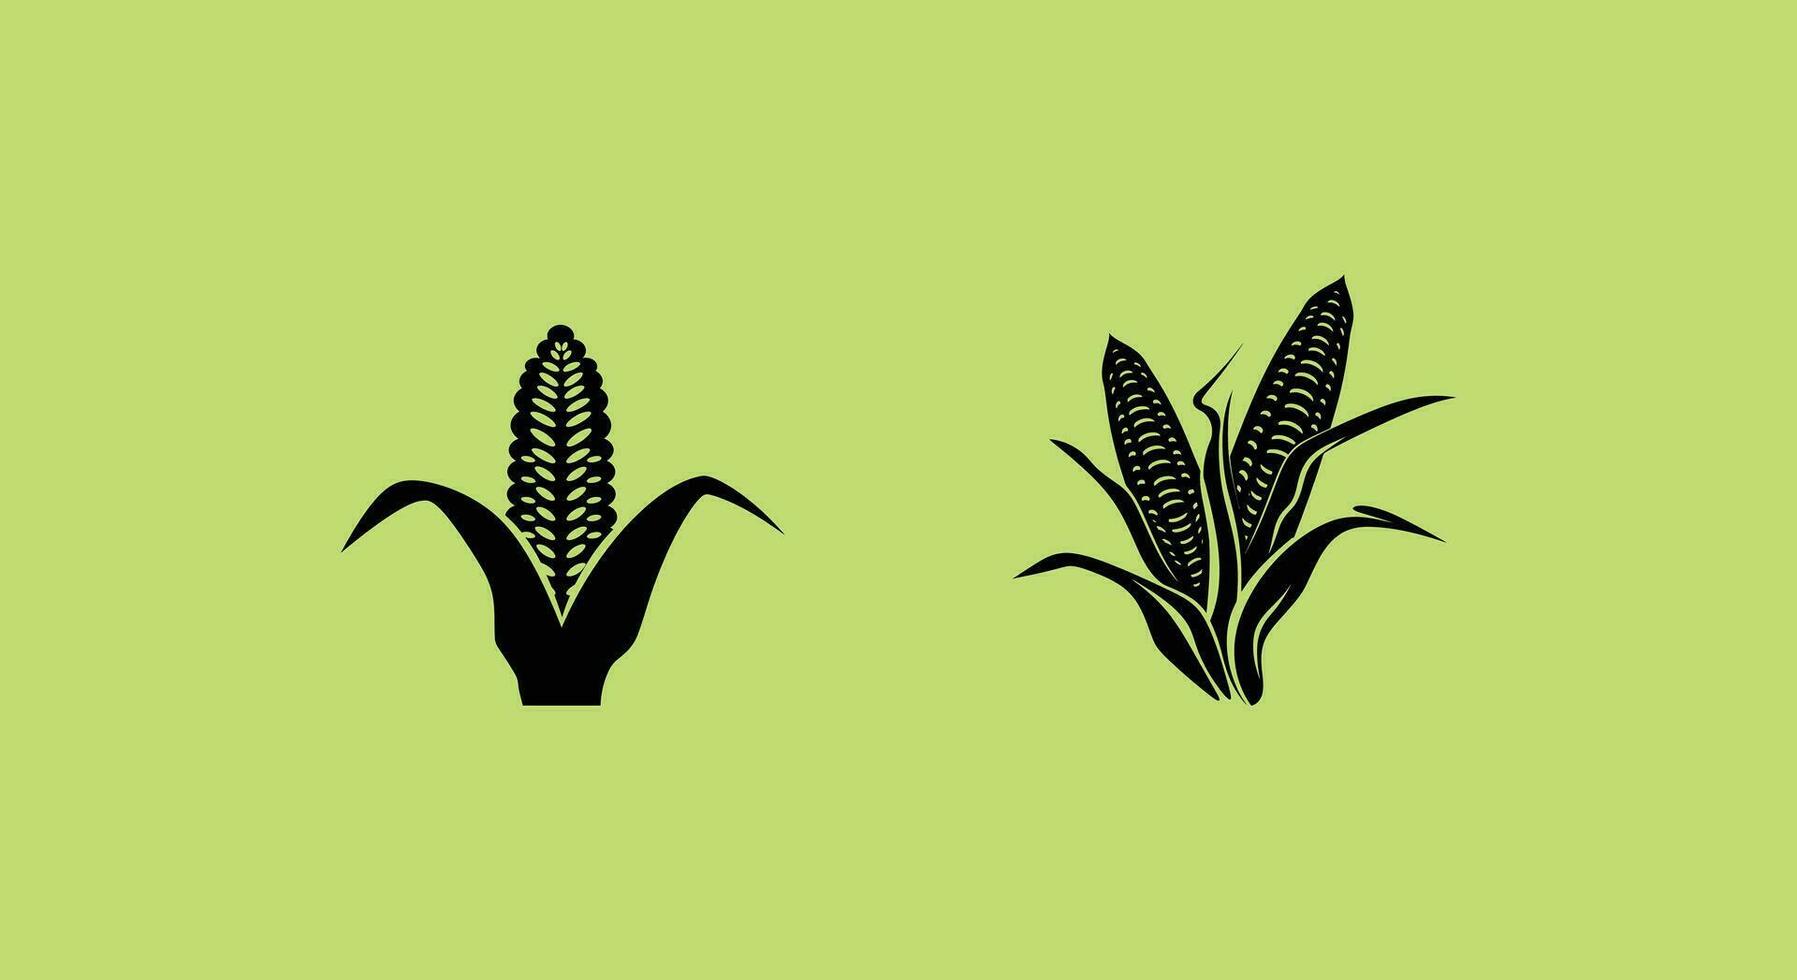 korenveld kalmte vredig vector illustratie van maïs velden